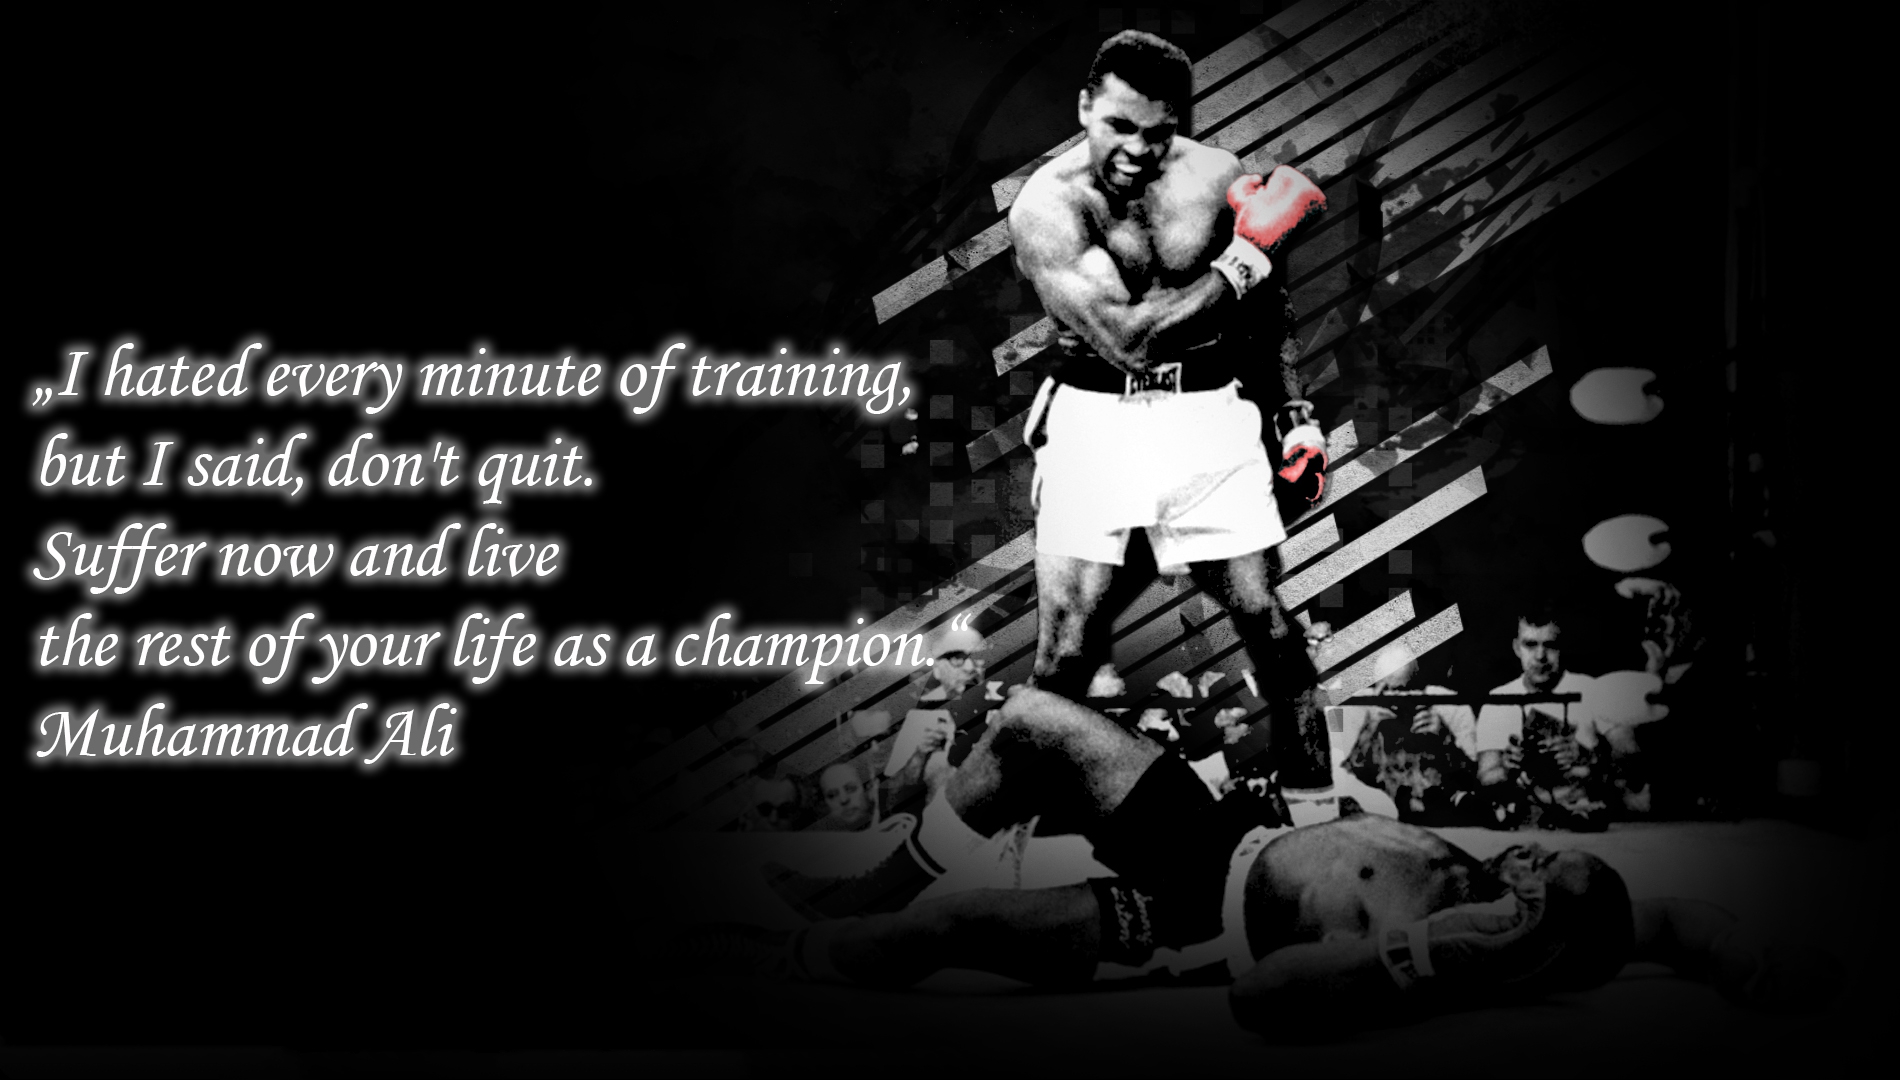 Muhammad Ali Quotes Hd - 1900x1080 Wallpaper 